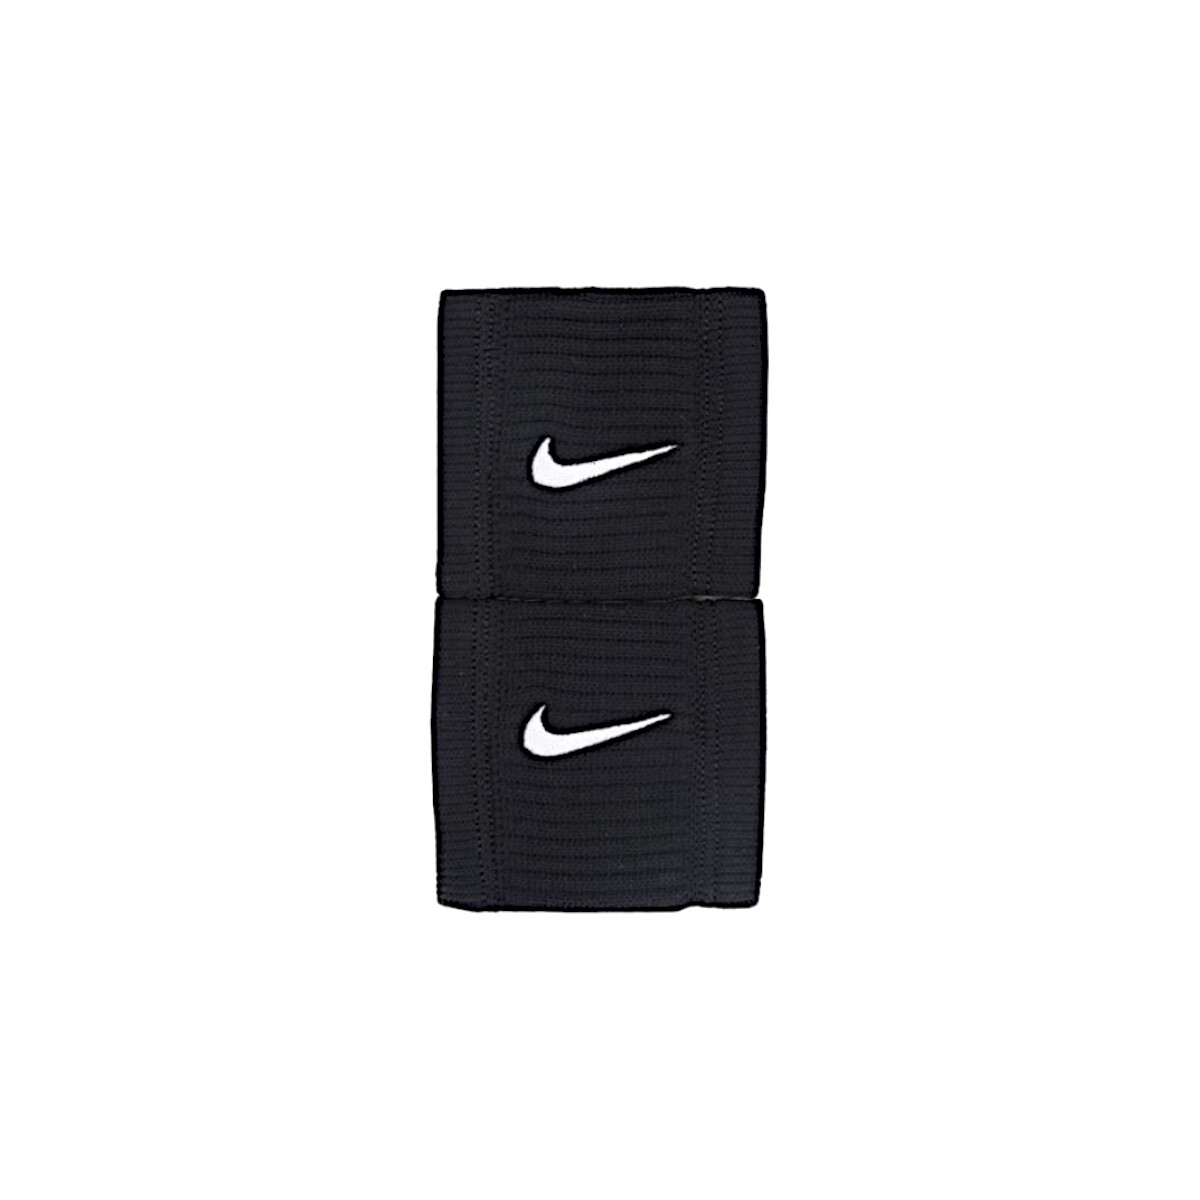 Accesorios Complemento para deporte Nike Dri-Fit Reveal Wristbands Negro